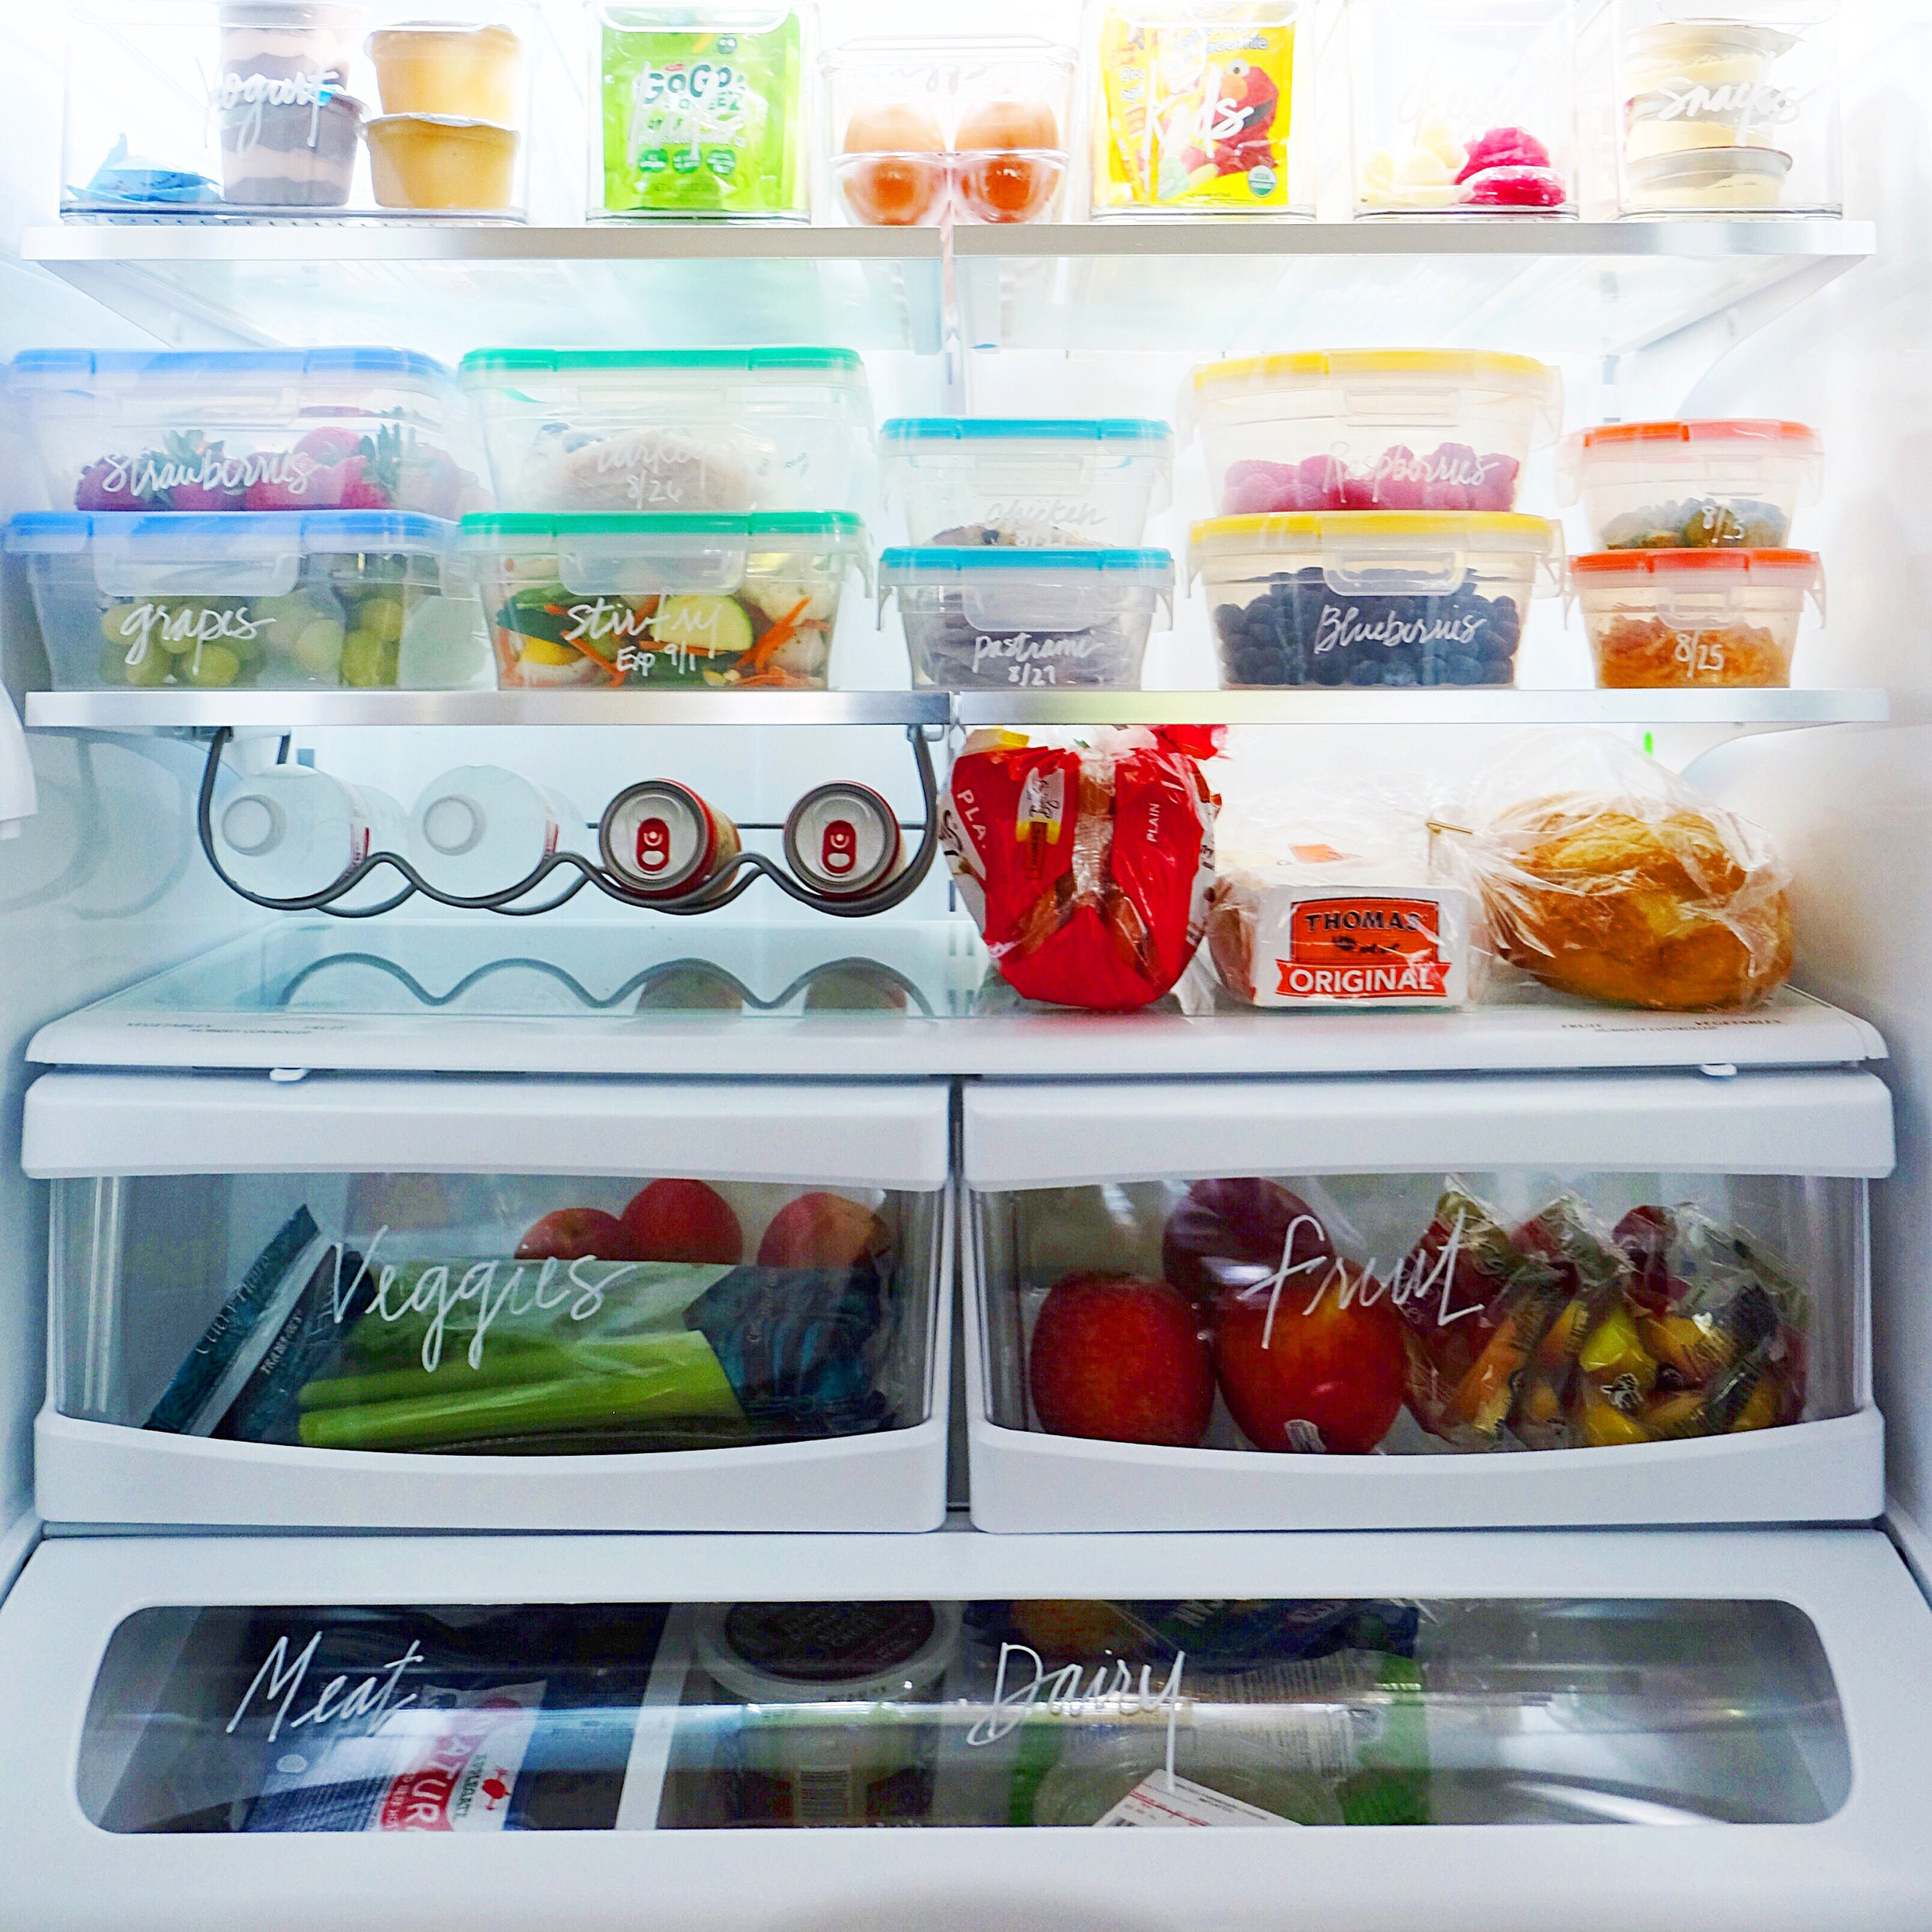 Refrigerator images